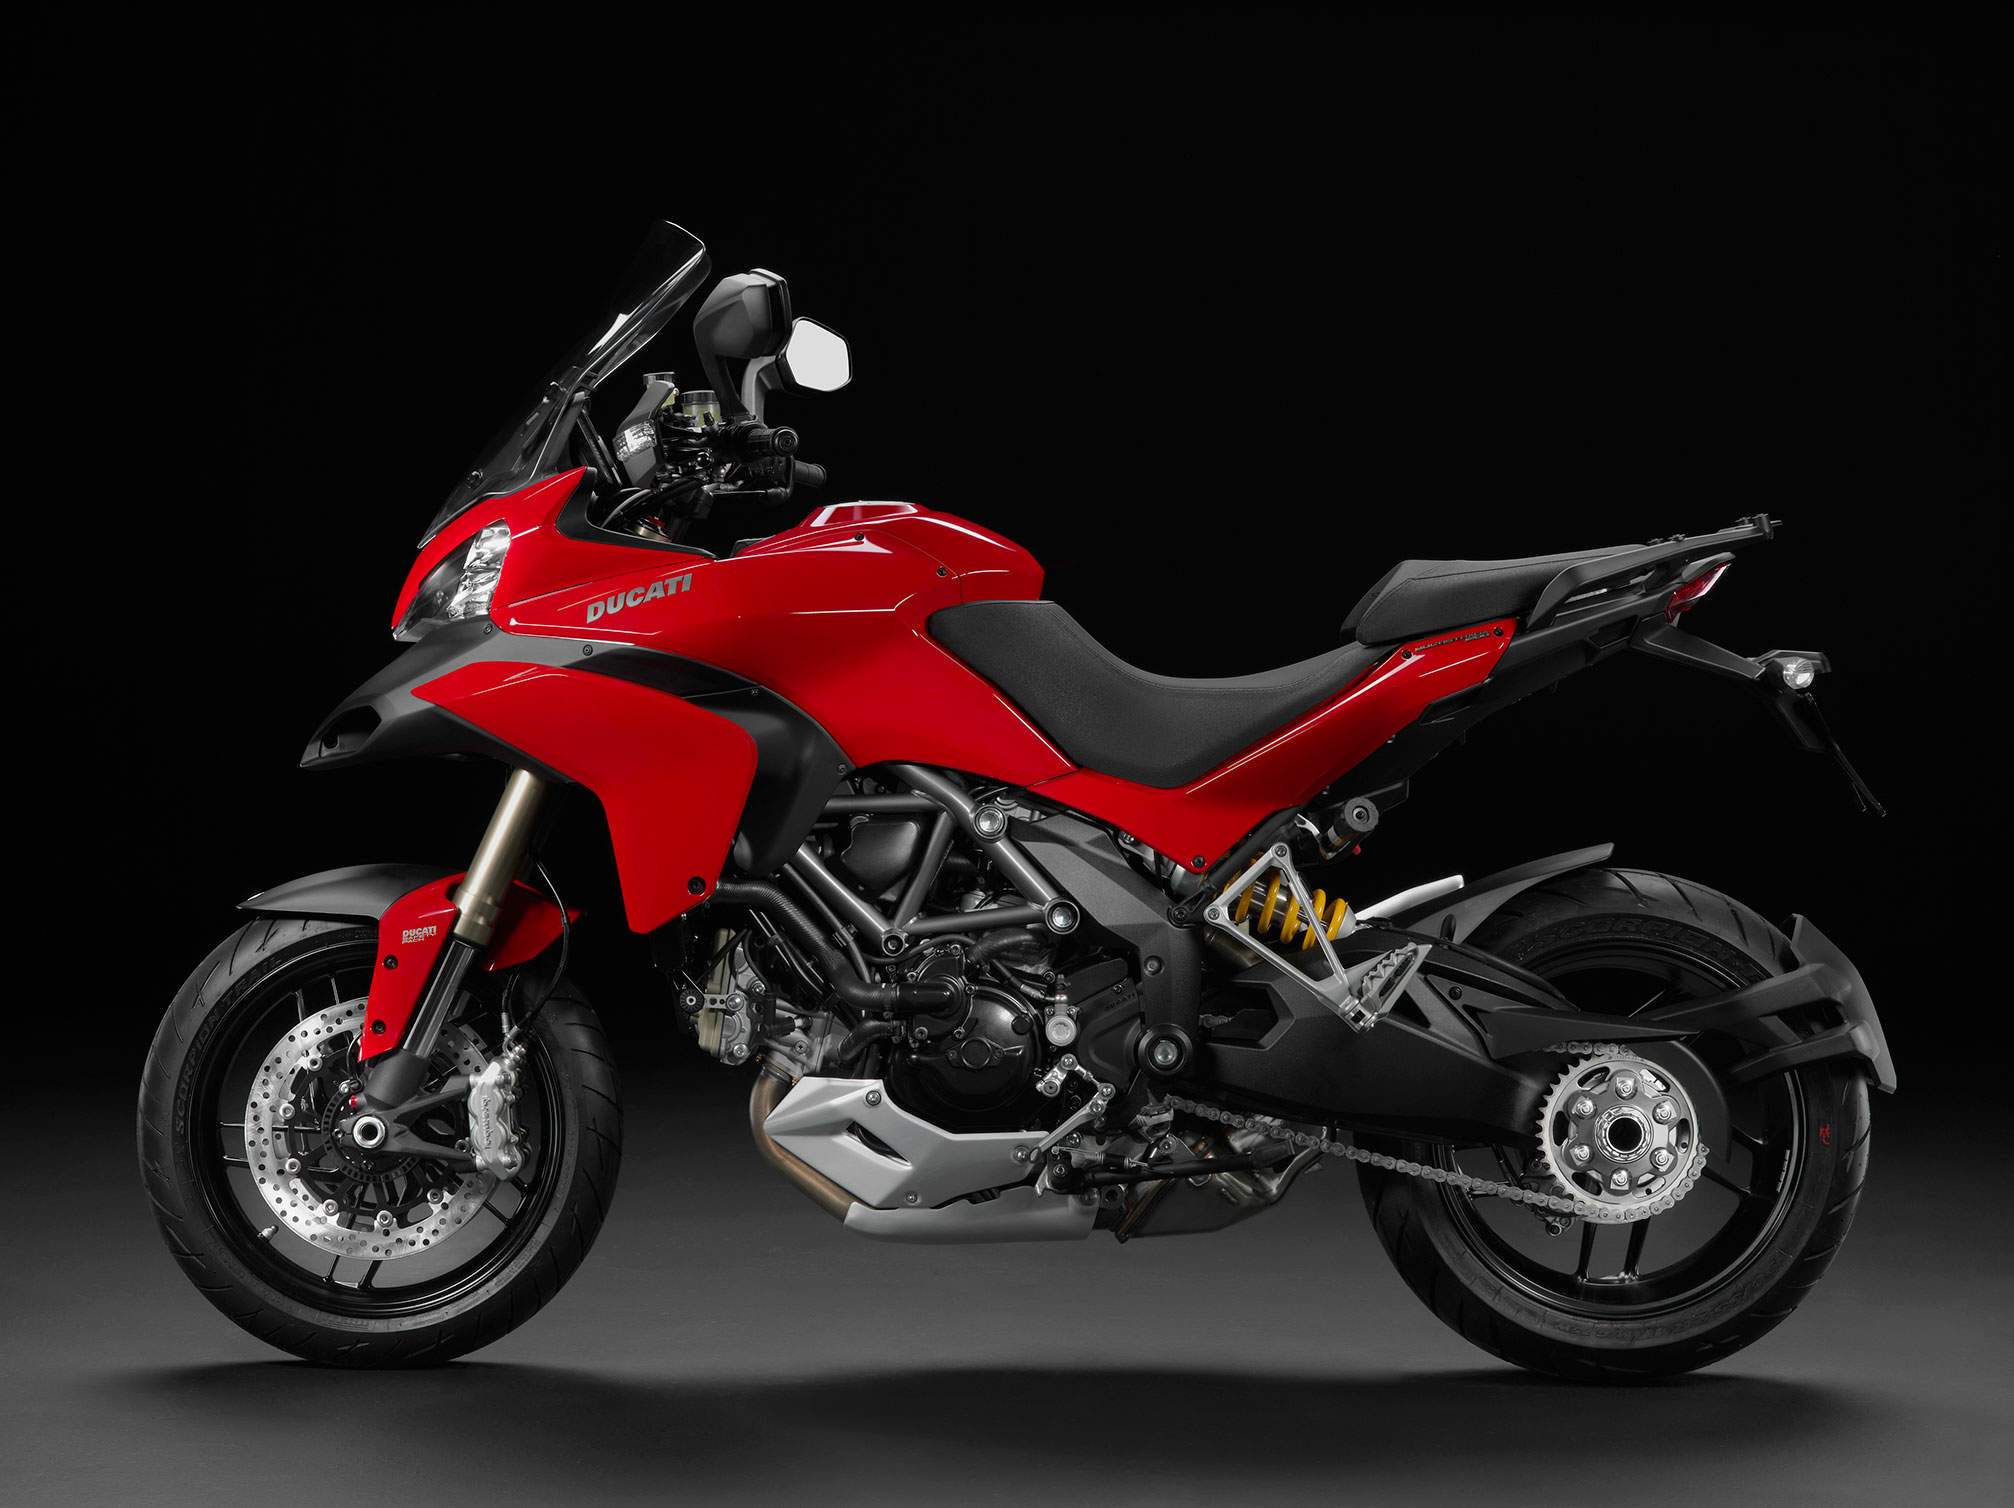 Мотоцикл Ducati Ducati Multistrada 1200S 2014 2014